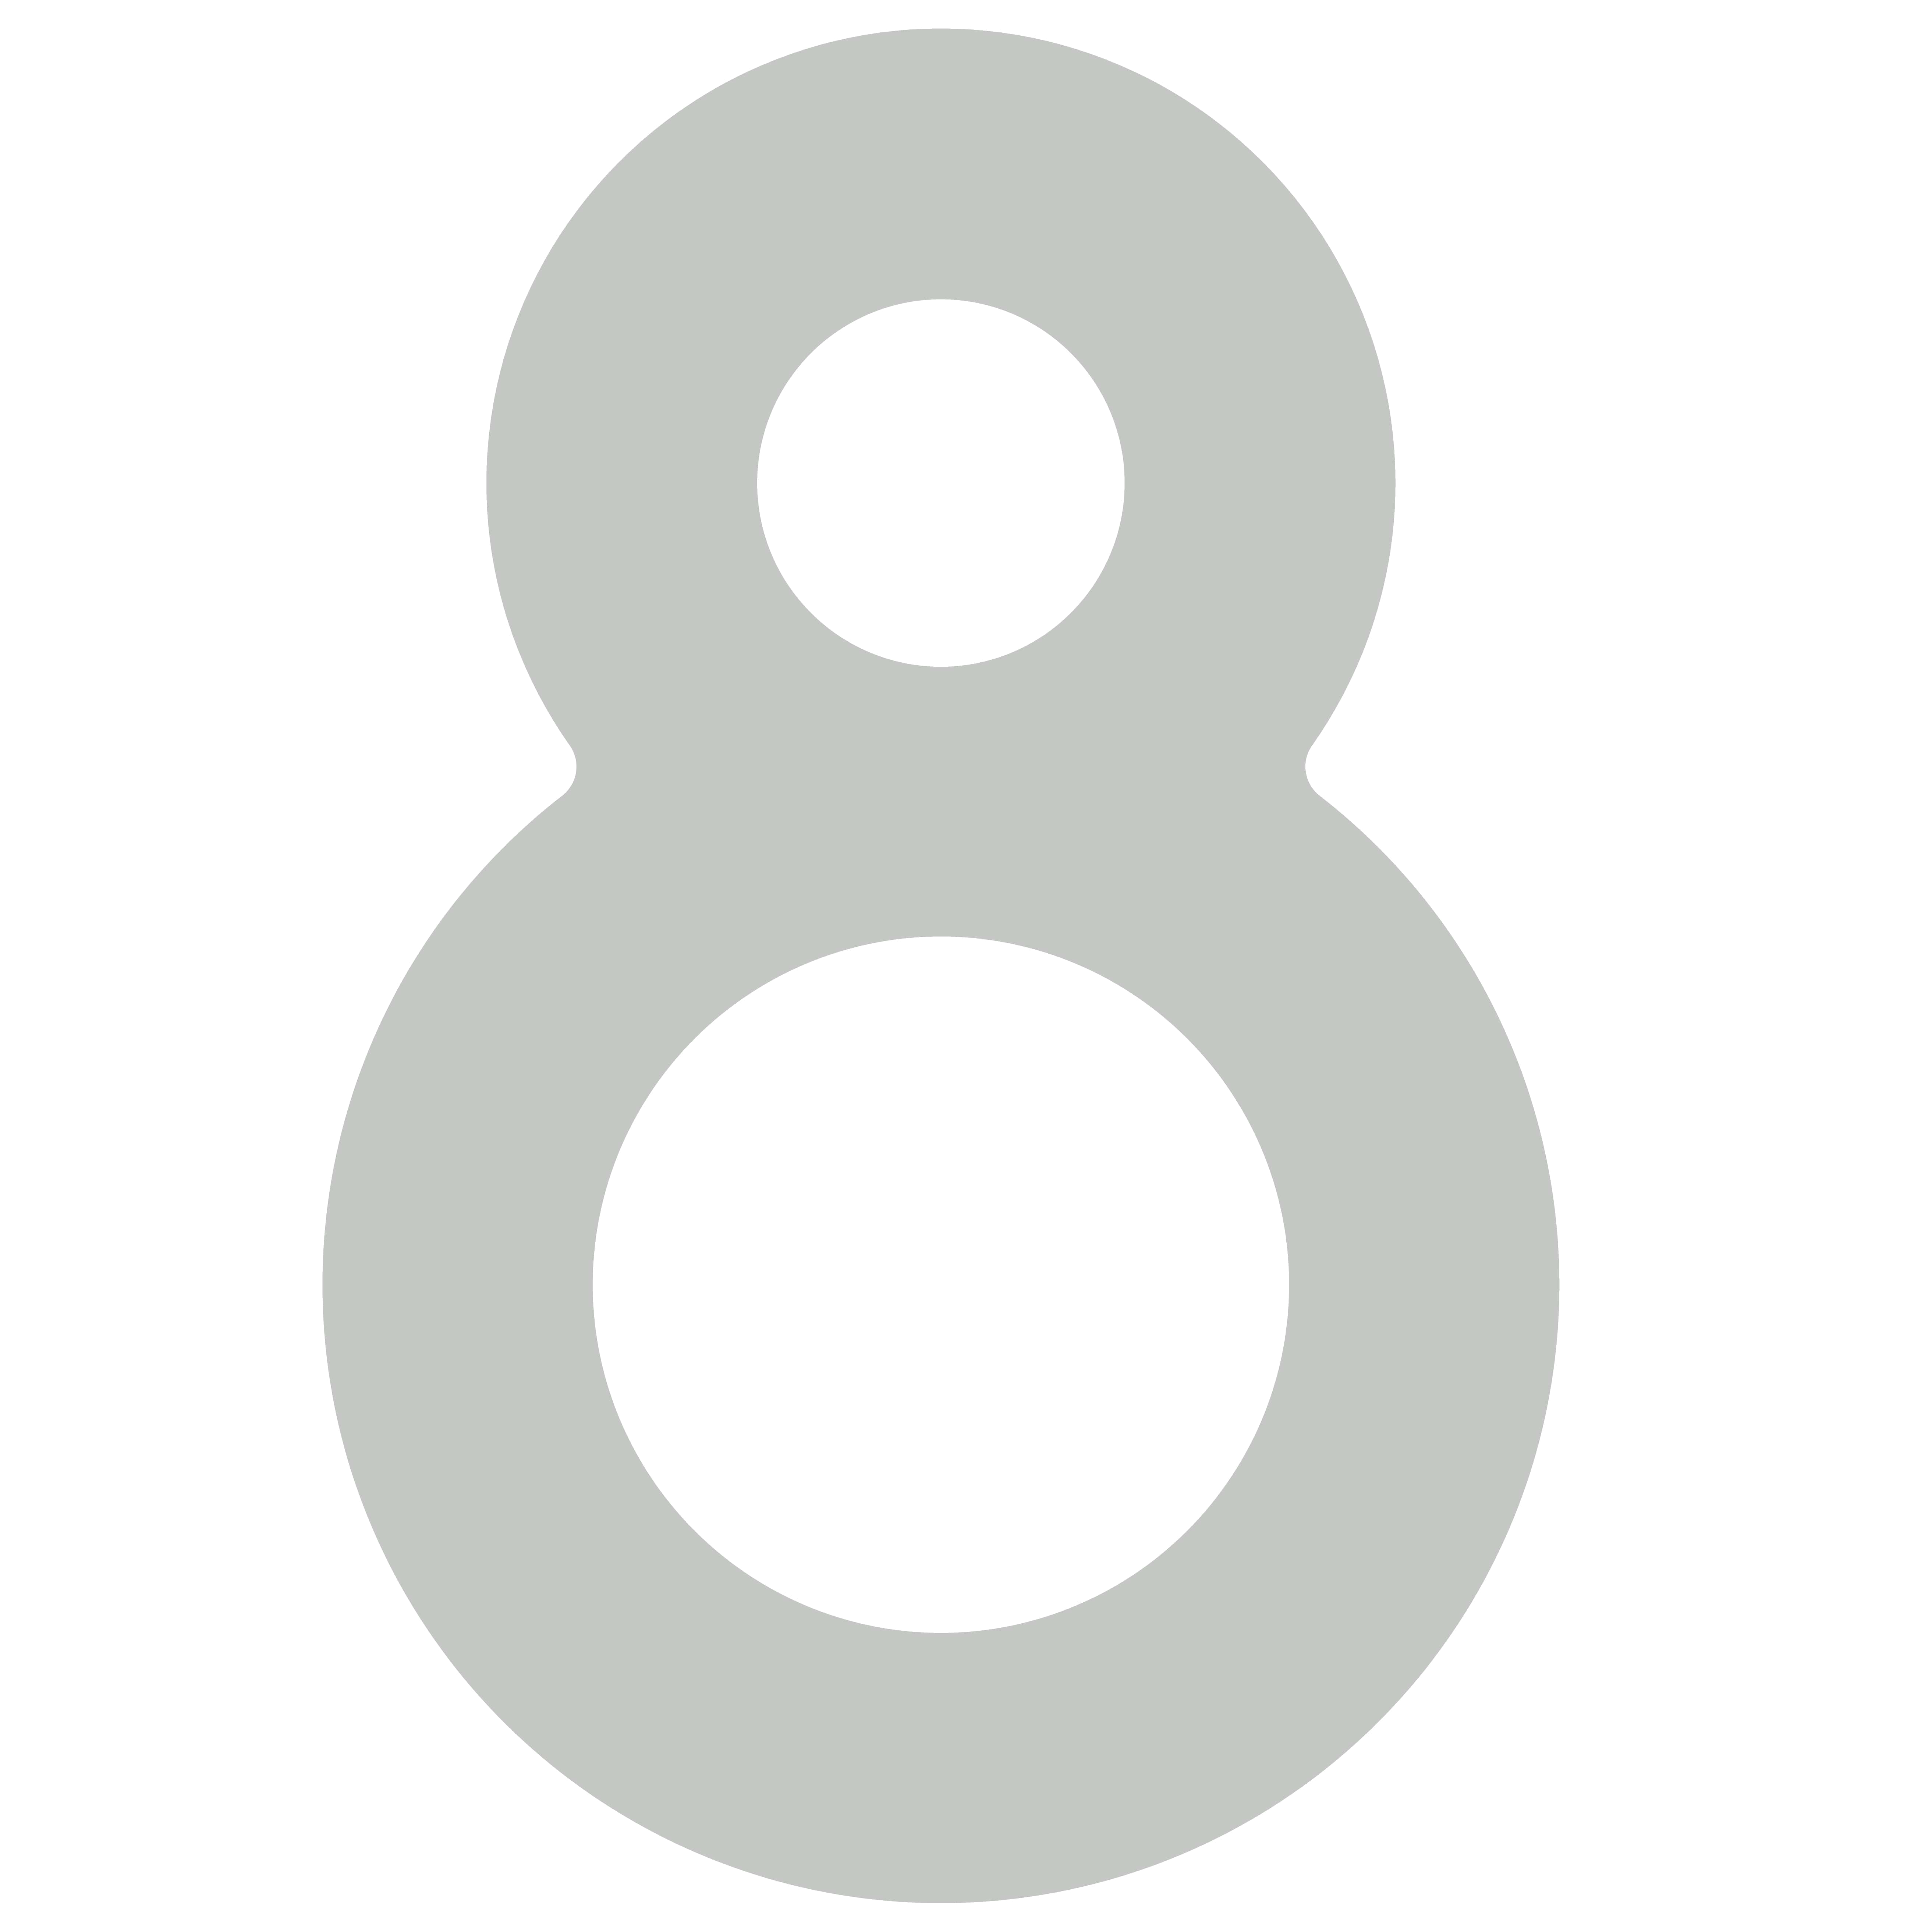 Samoprzylepny numer domu „8” - 40 mm na szary